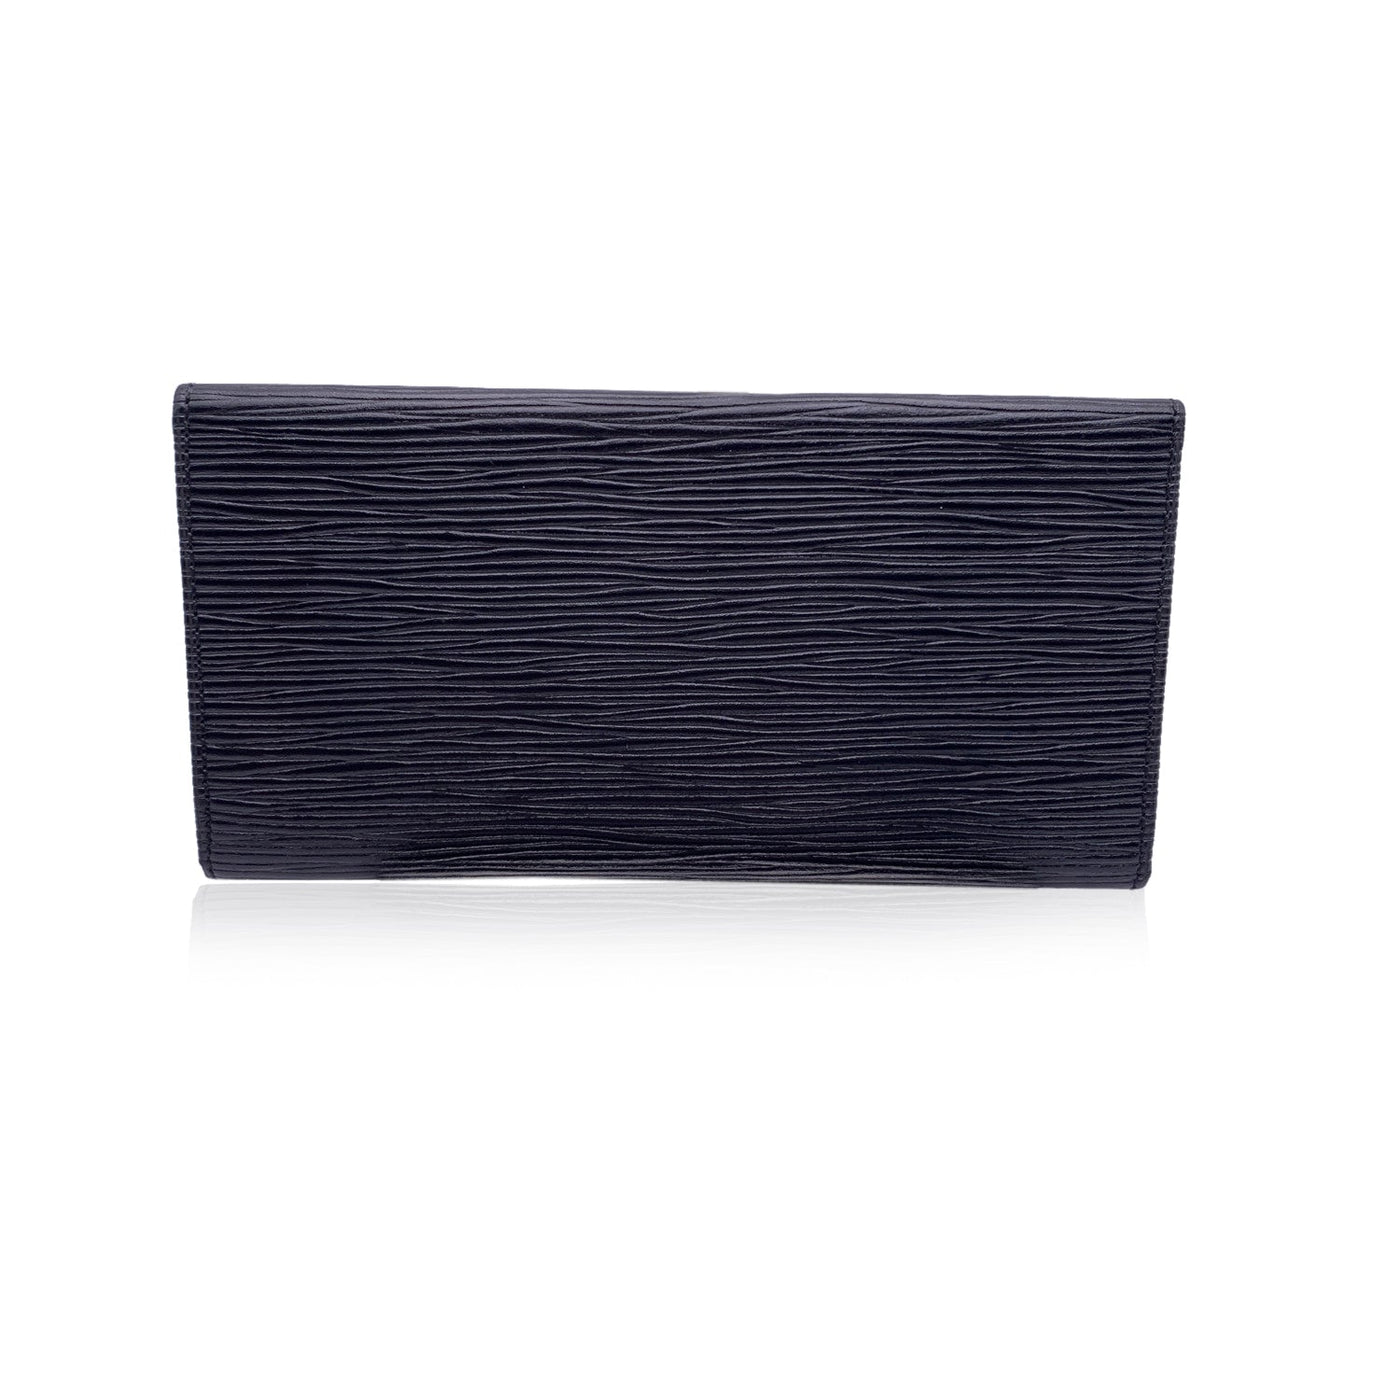 Louis Vuitton EPI Leather Wallet